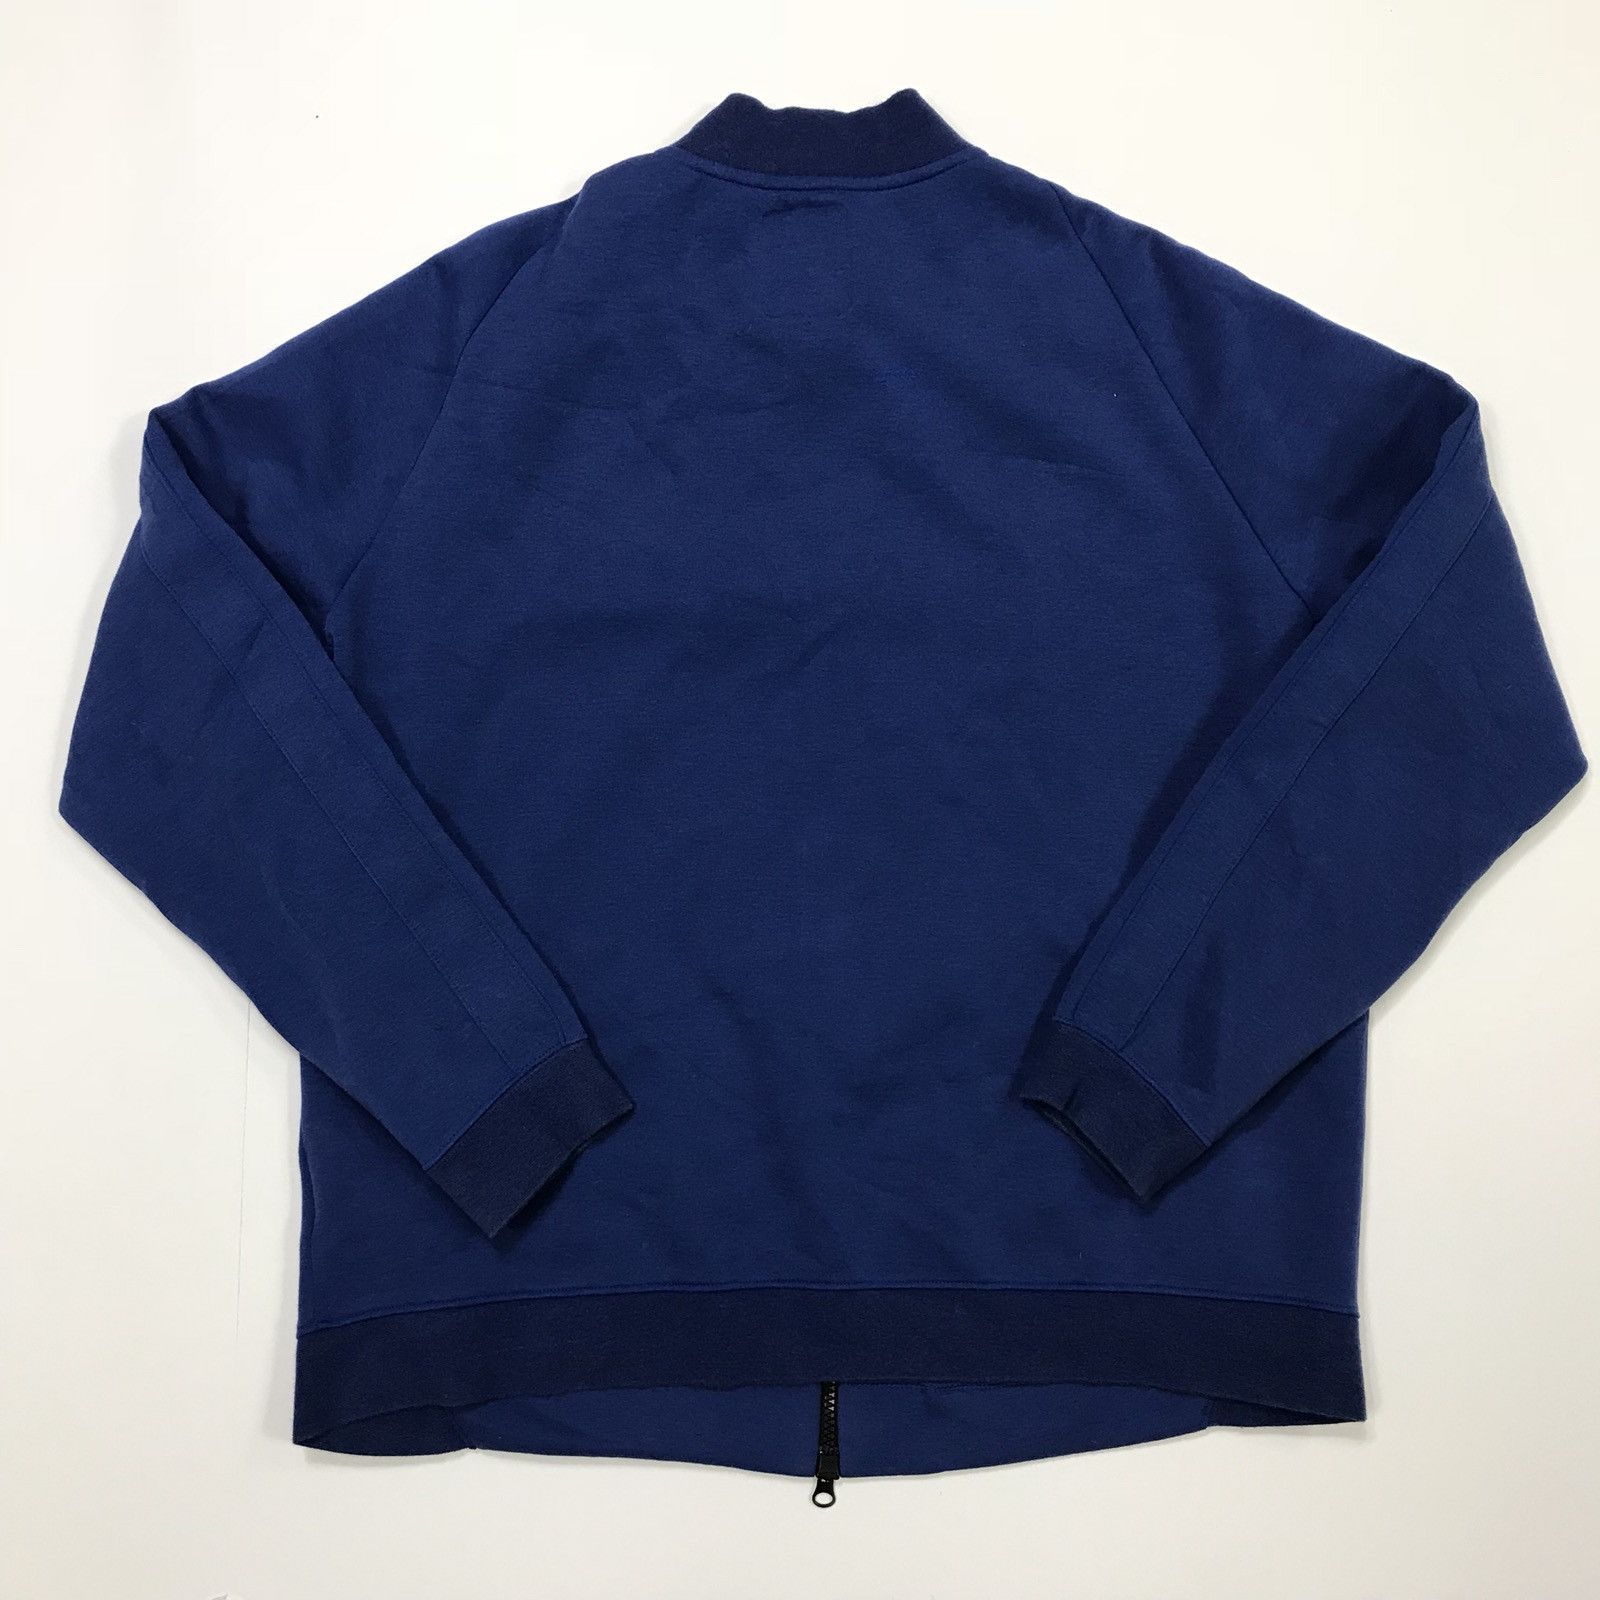 Nike Nike Tech Fleece Sweatshirt Full Zip Blue Black Acg Vtg 90s Size US L / EU 52-54 / 3 - 3 Preview